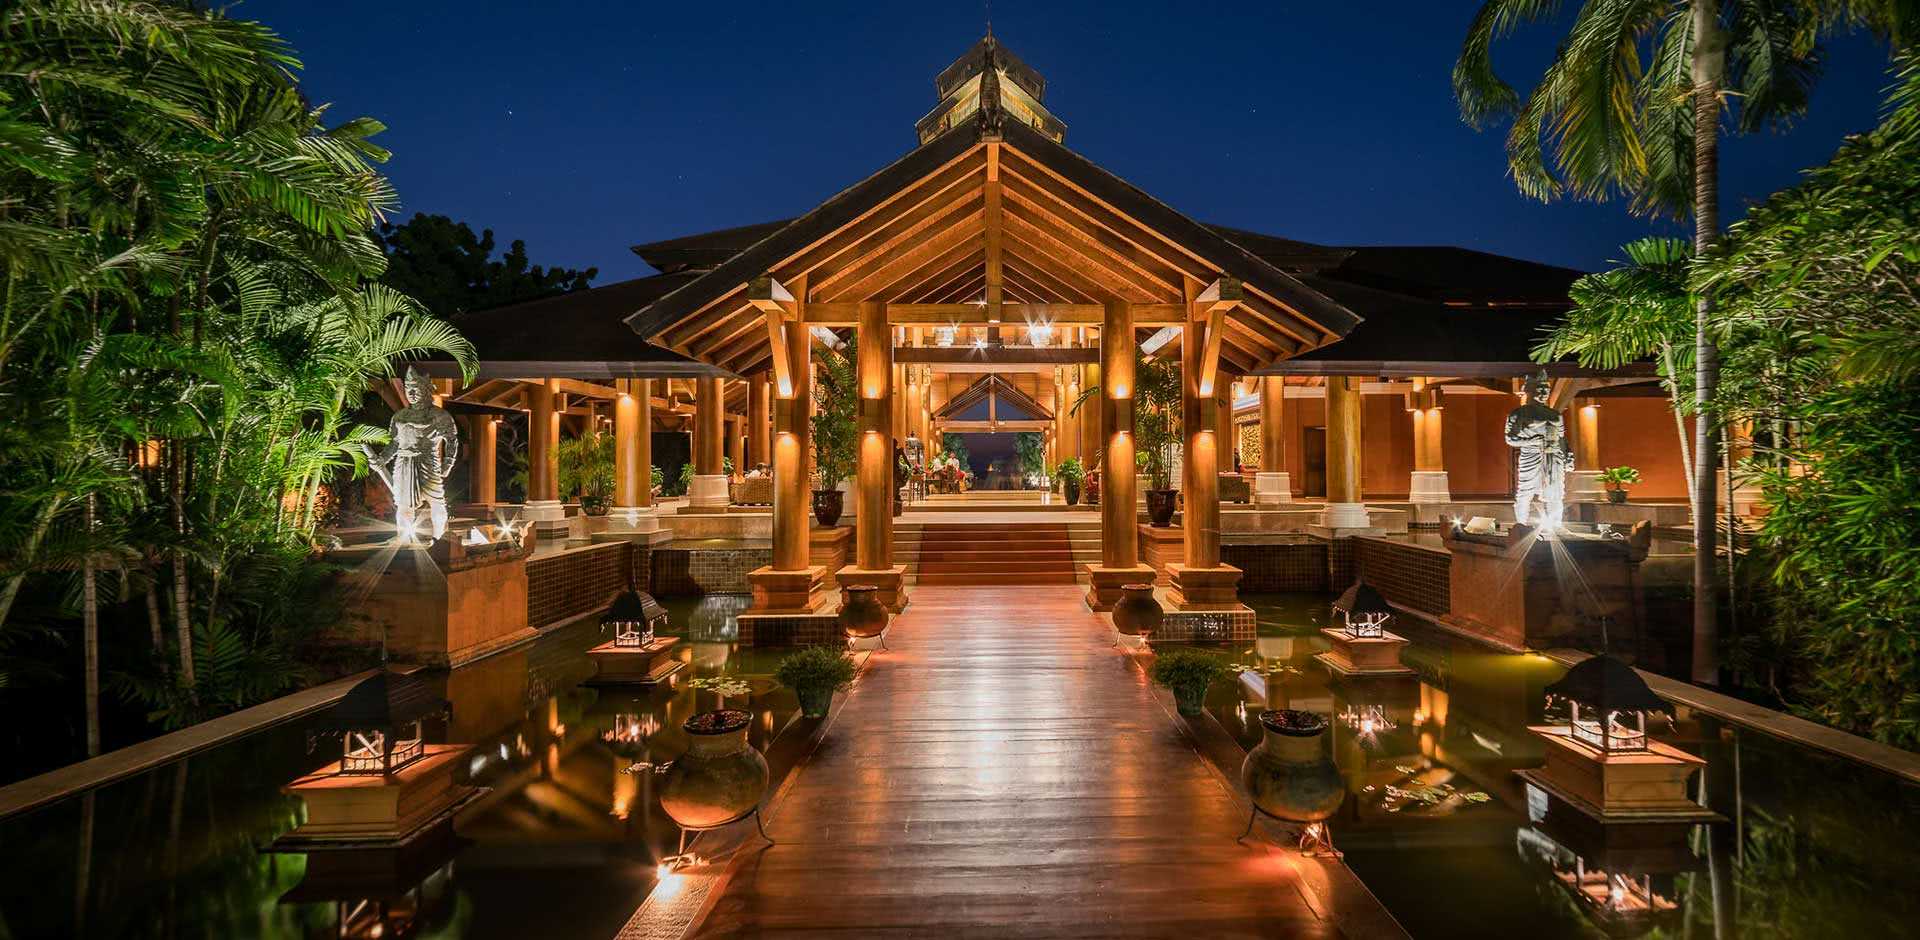 Aureum Palace Bagan Myanmar Burma Luxury Hotels Resorts Remote Lands